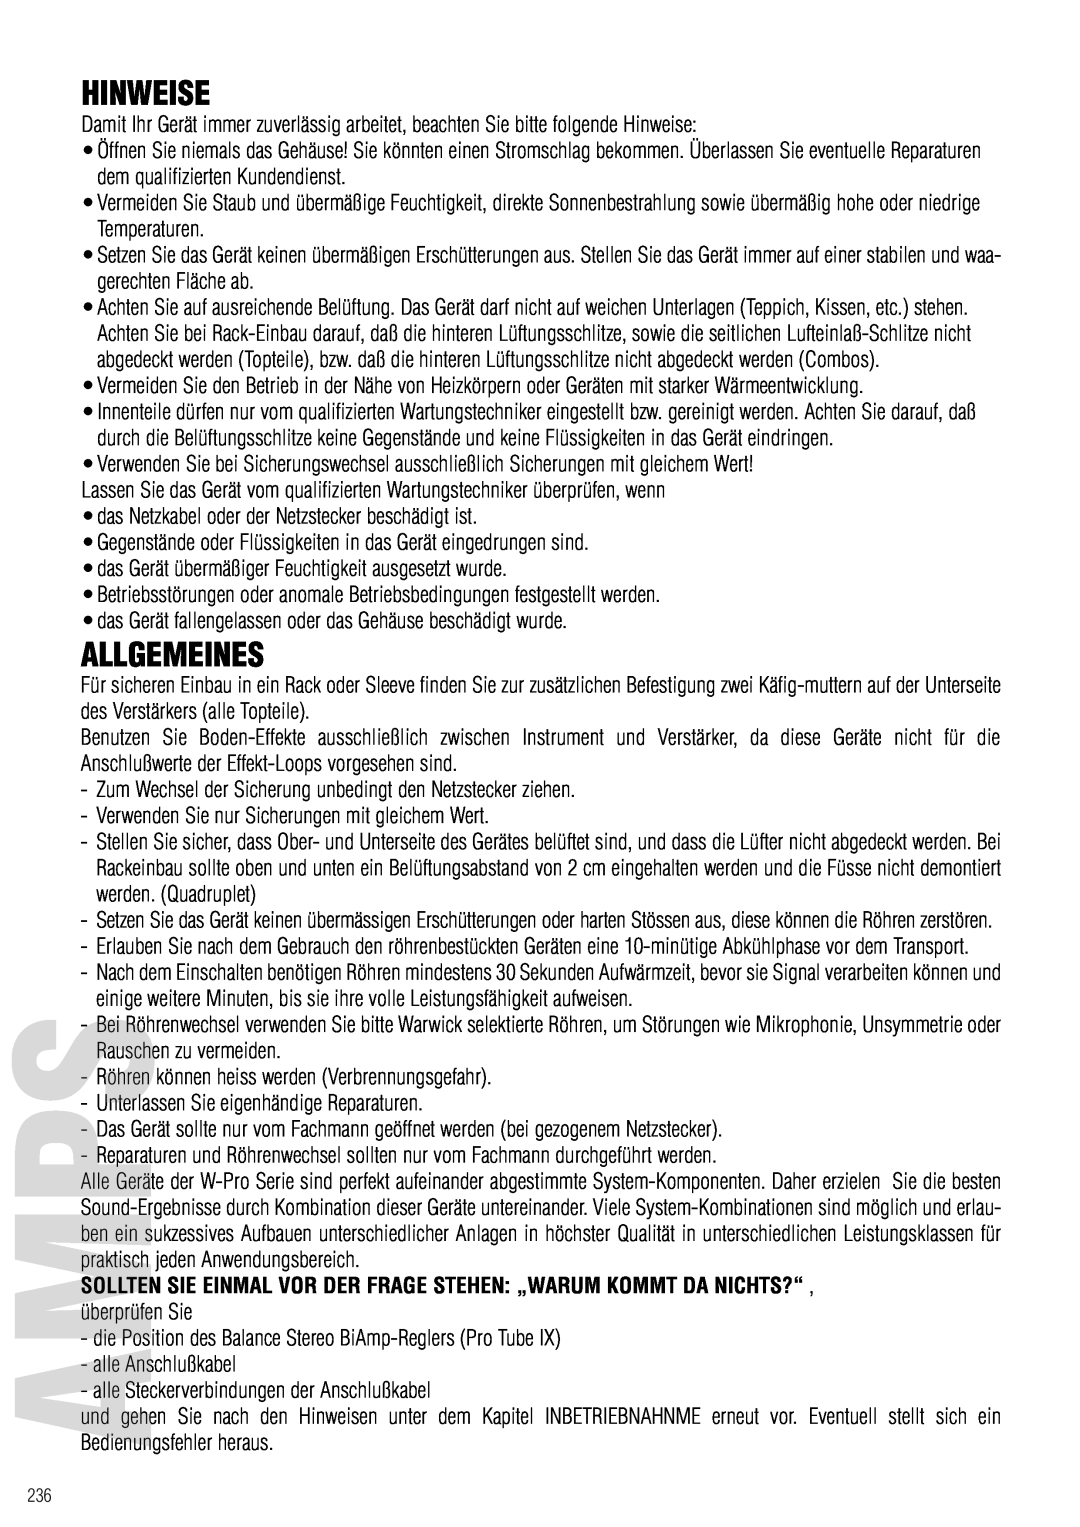 Warwick Quad IV owner manual Hinweise, Allgemeines 